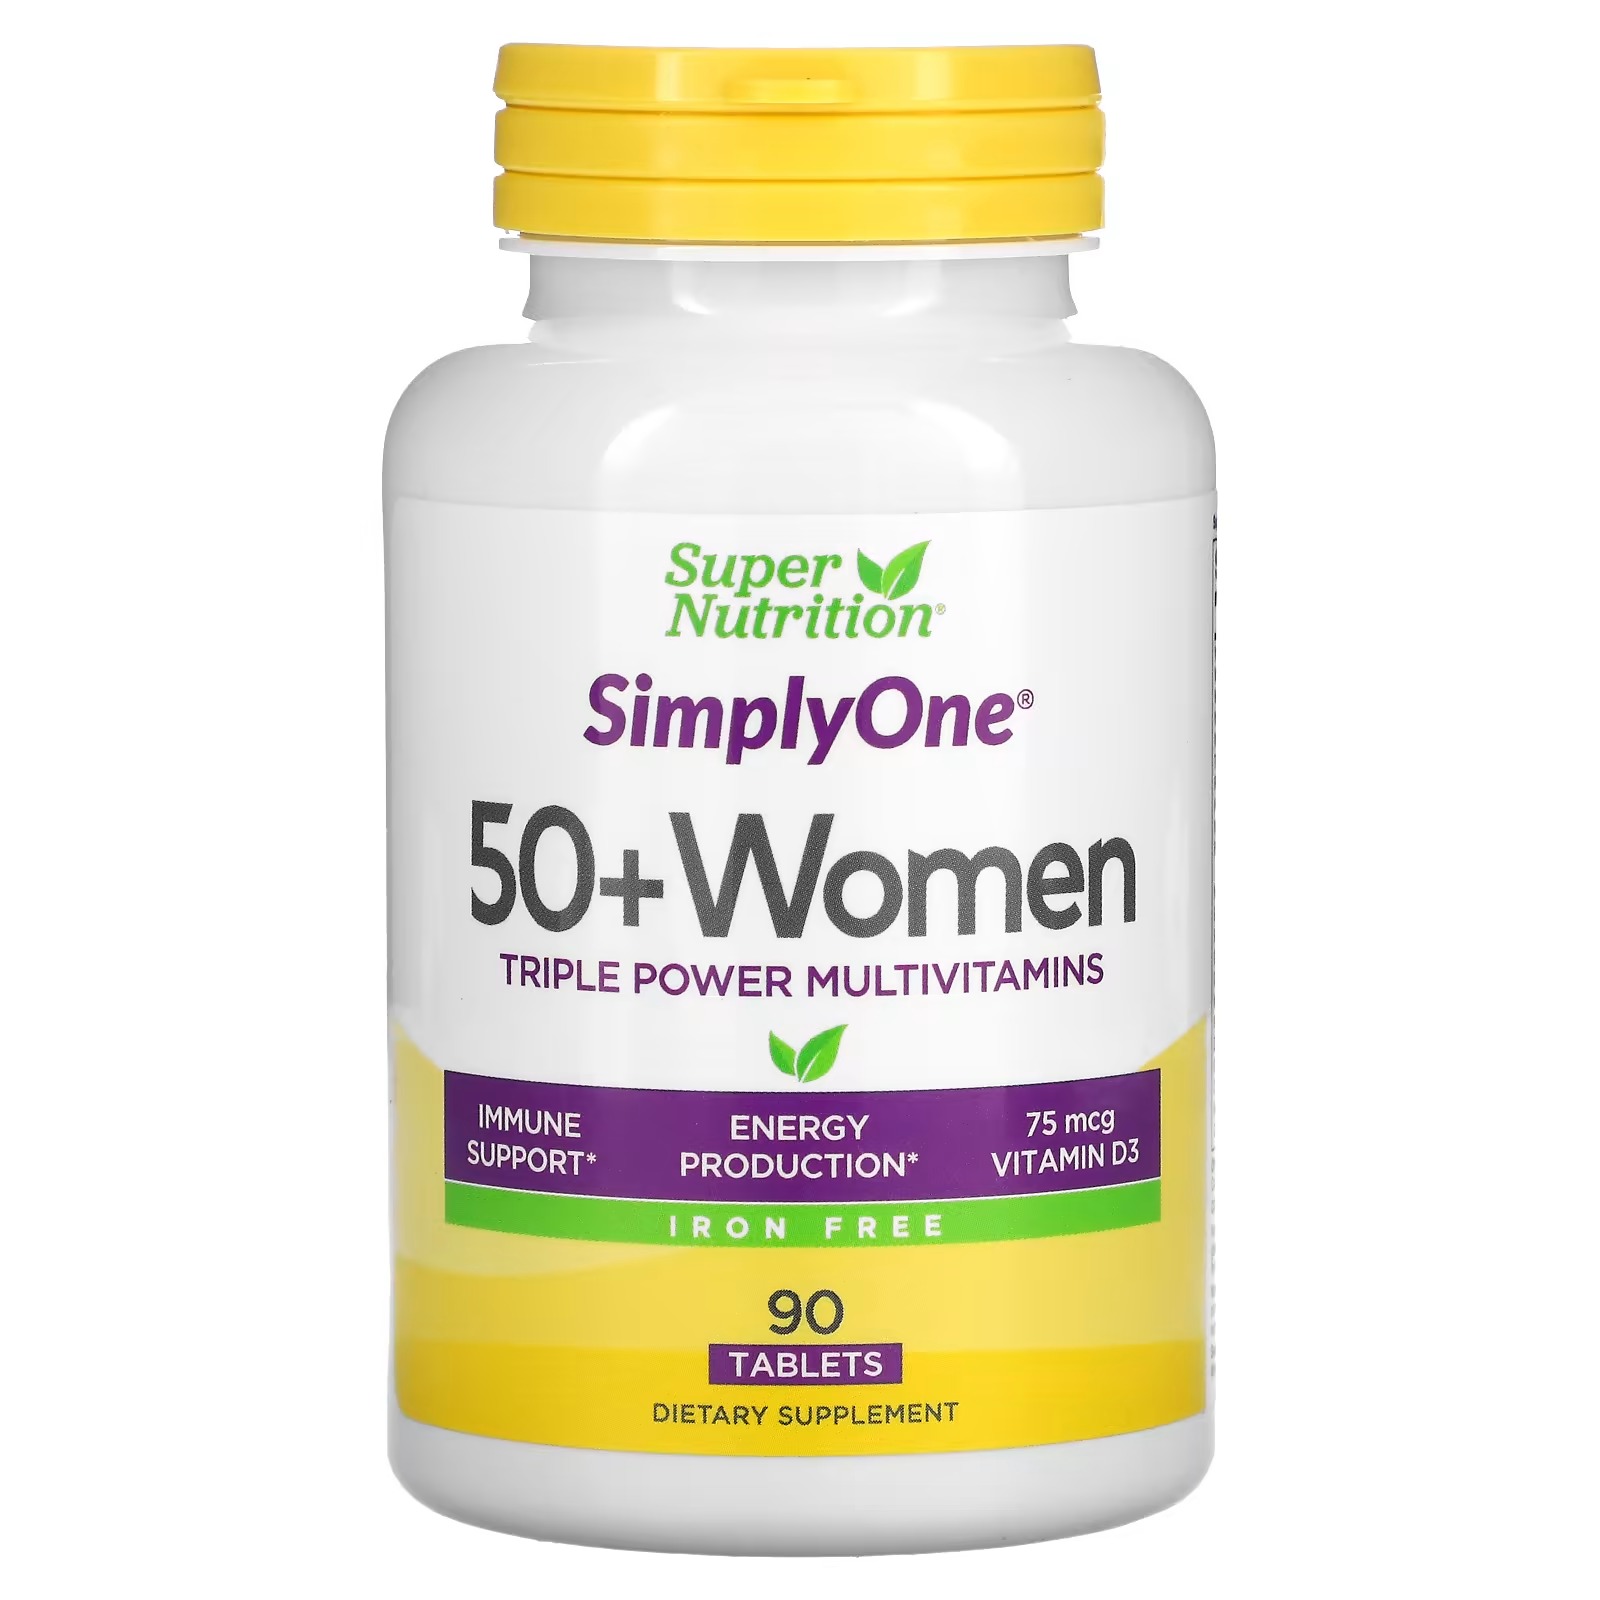 Мультивитамины Super Nutrition Triple Power для женщин старше 50 лет, 90 таблеток мультивитамины super nutrition для мужчин старше 50 лет без железа 90 таблеток